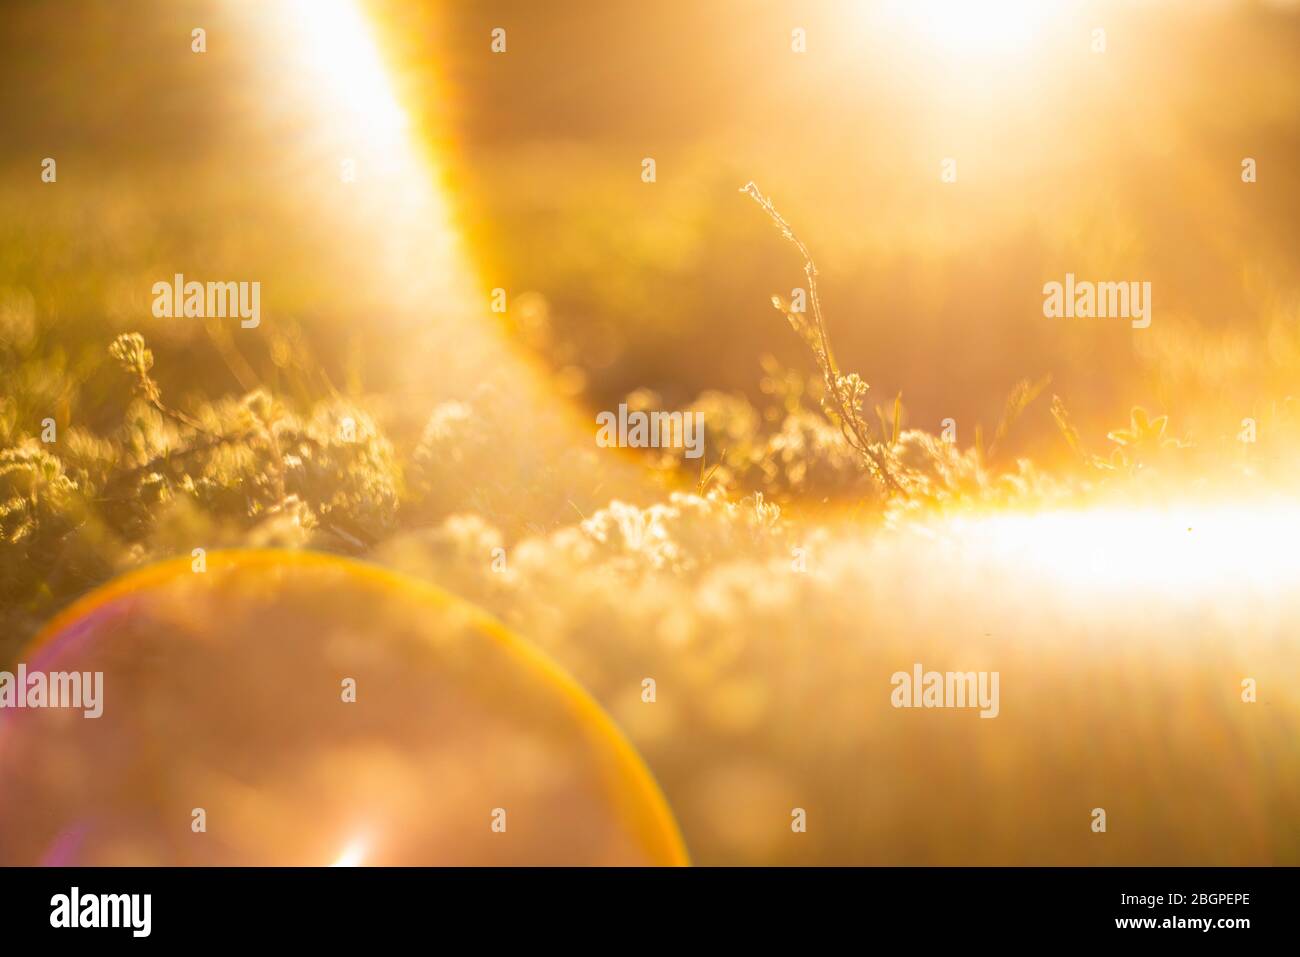 Plants at sunset, background Stock Photo